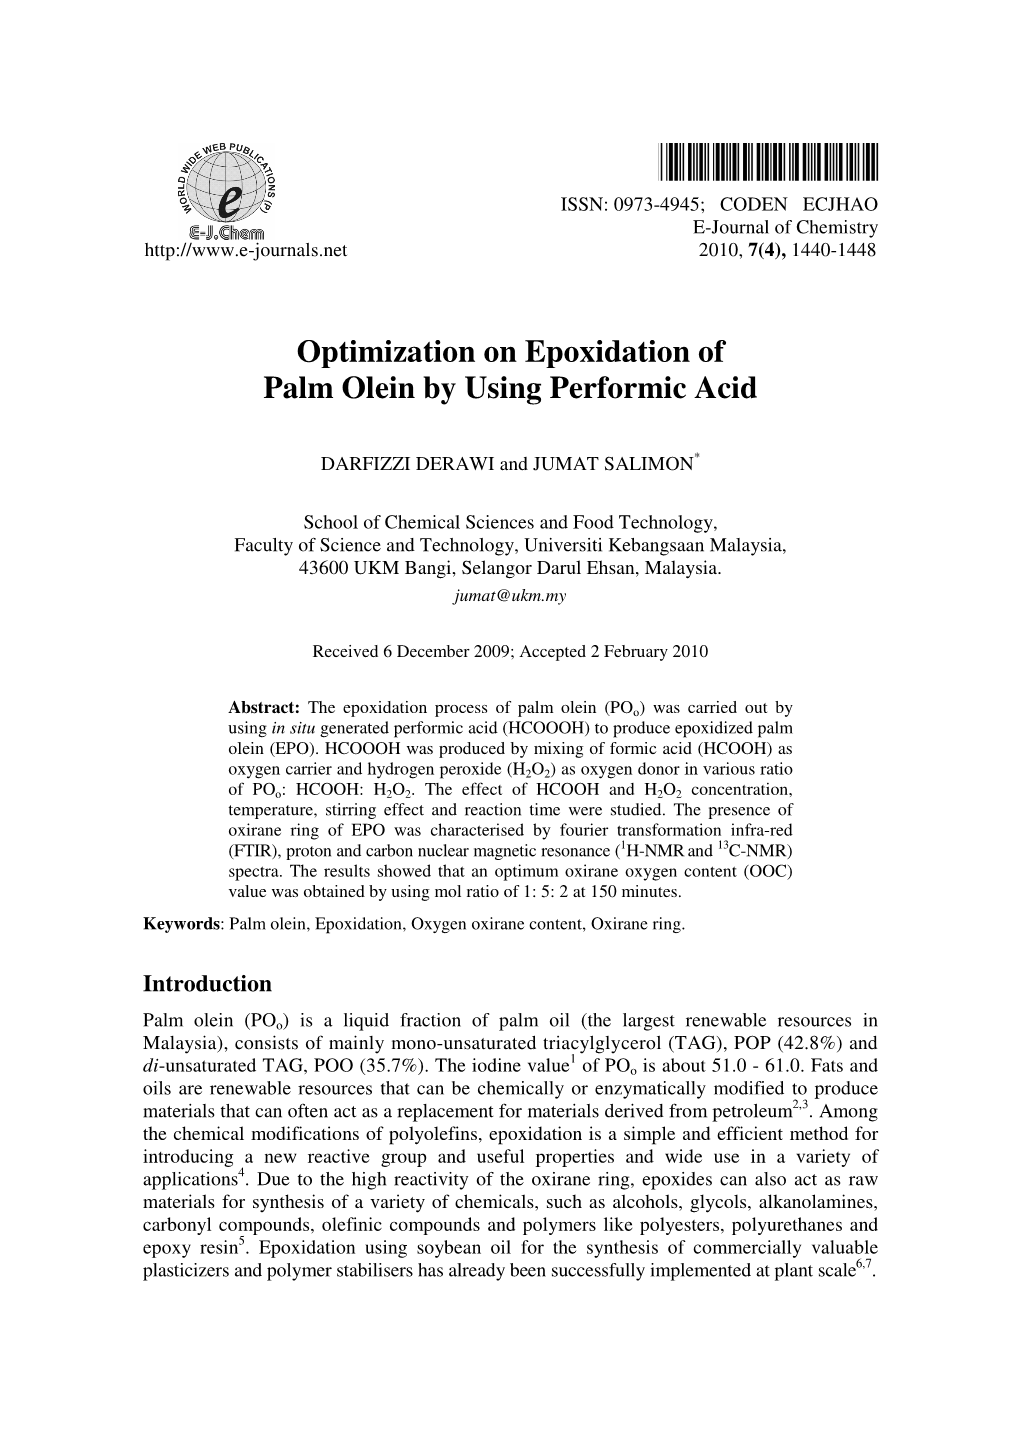 Optimization on Epoxidation of Palm Olein by Using Performic Acid